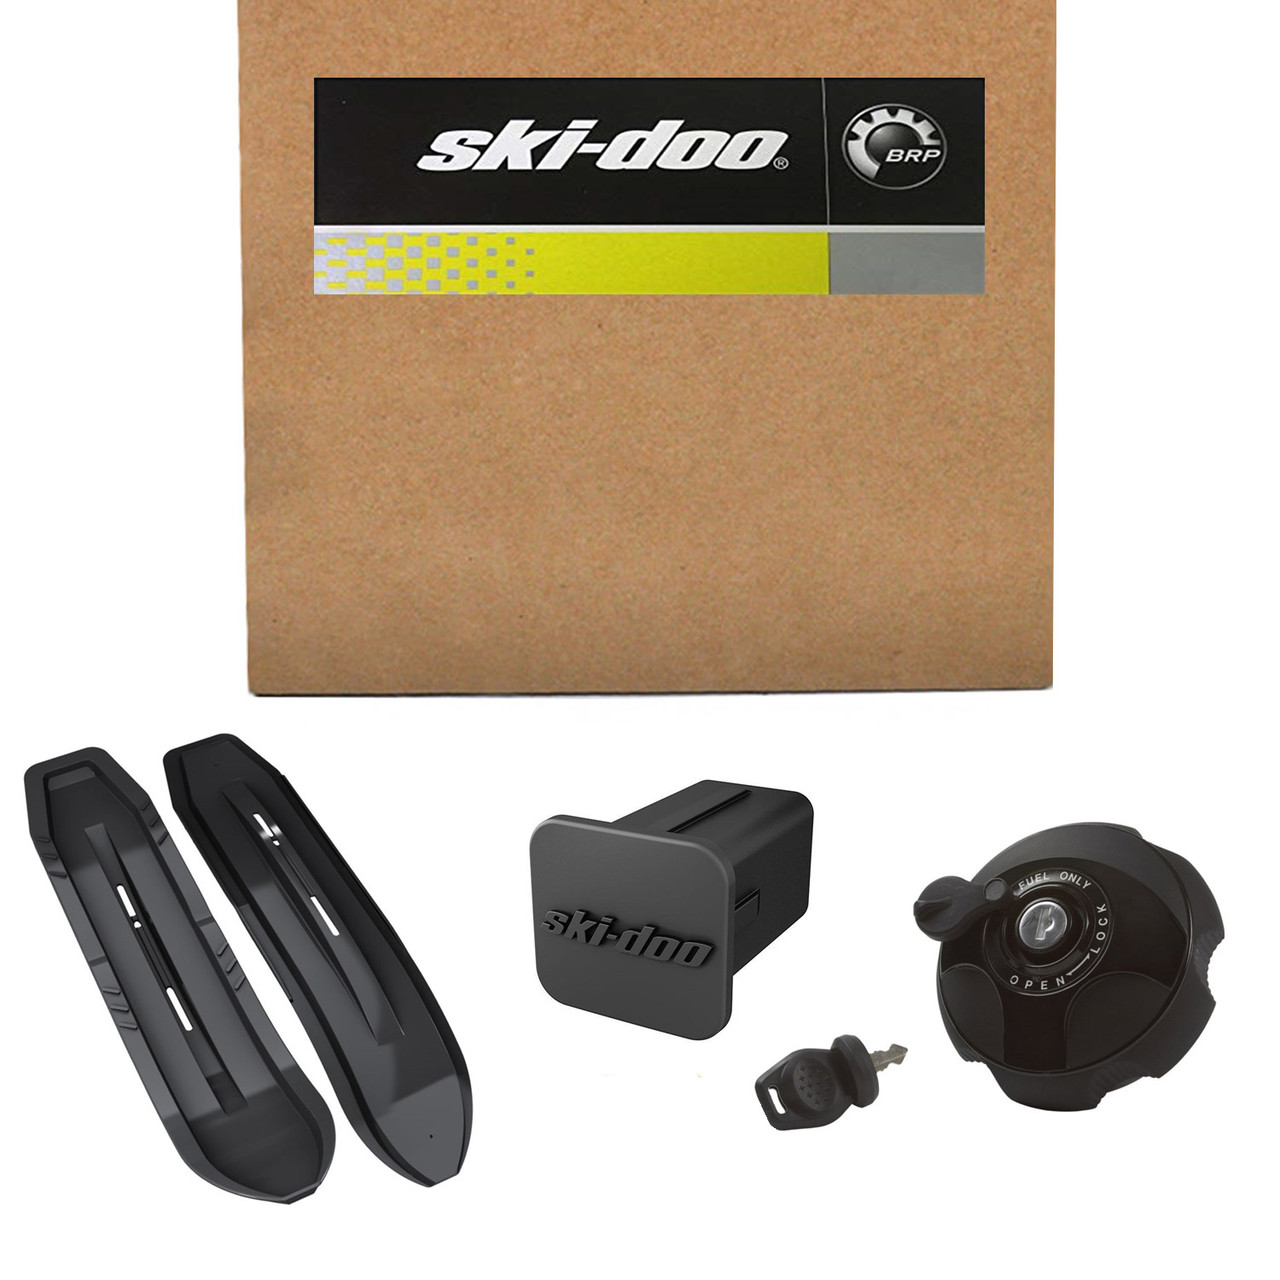 Ski-Doo New OEM Console-Rh Kit, 861805517